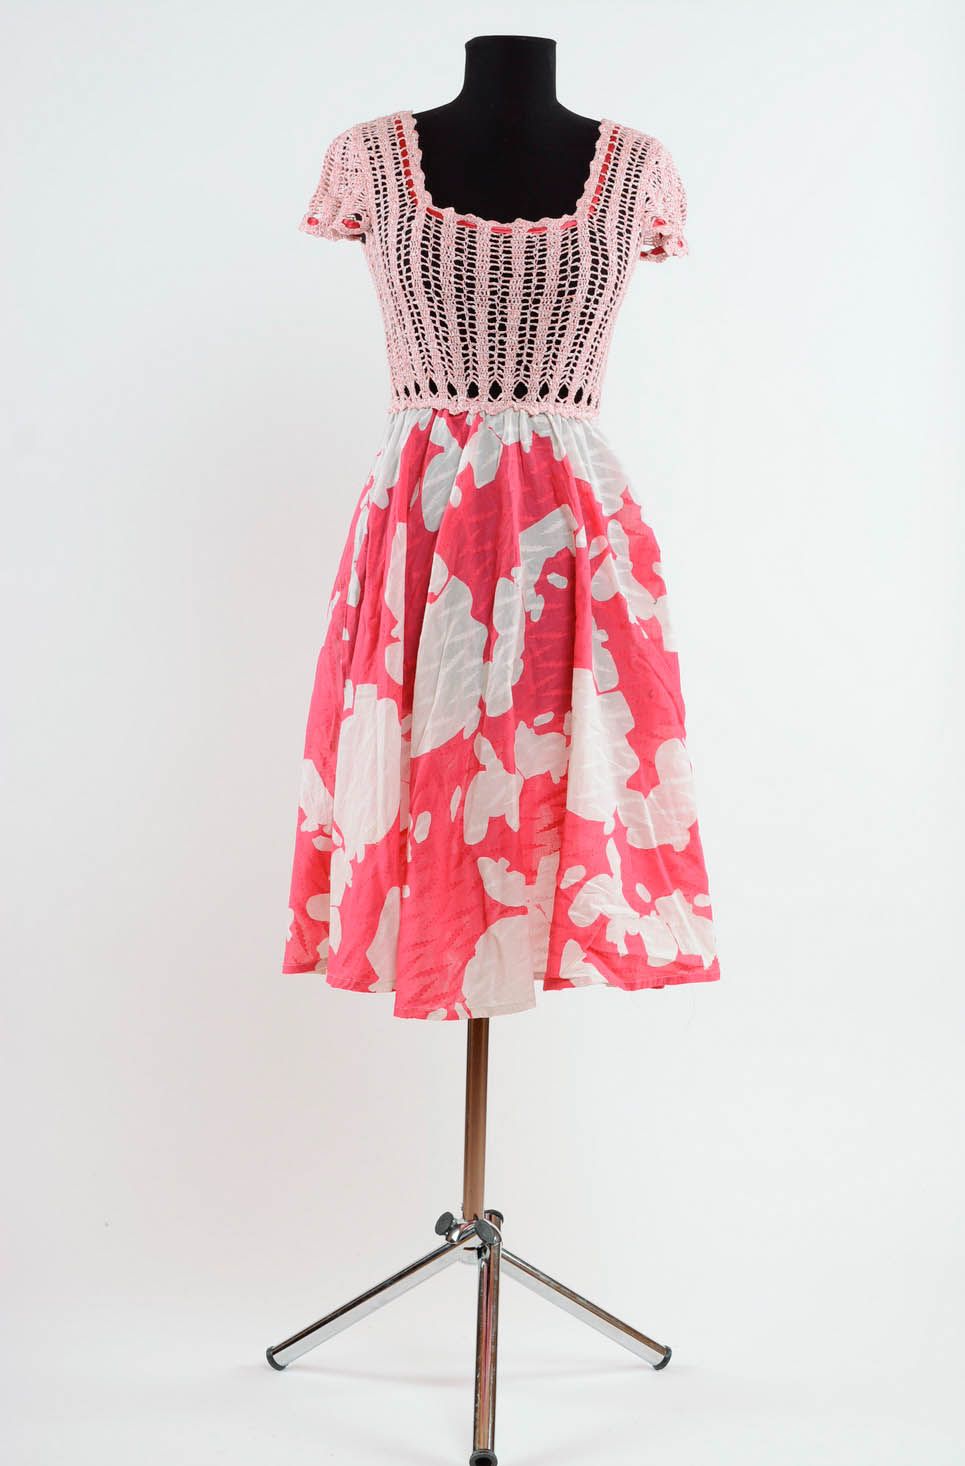 Robe rose tricotée à main artisanale photo 1